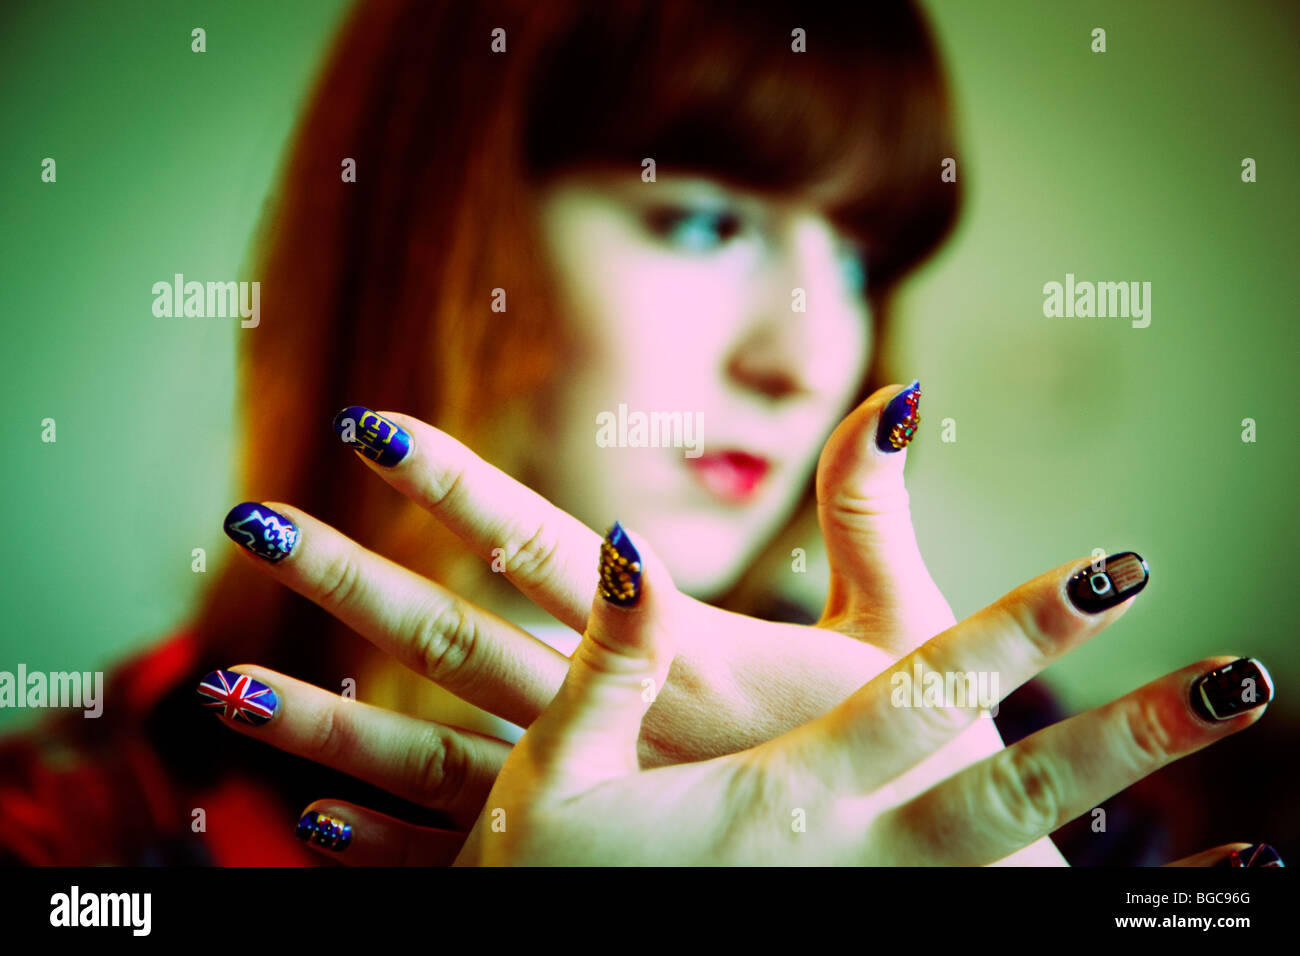 Teenage girl with bespoke painted fingernail art Stock Photo